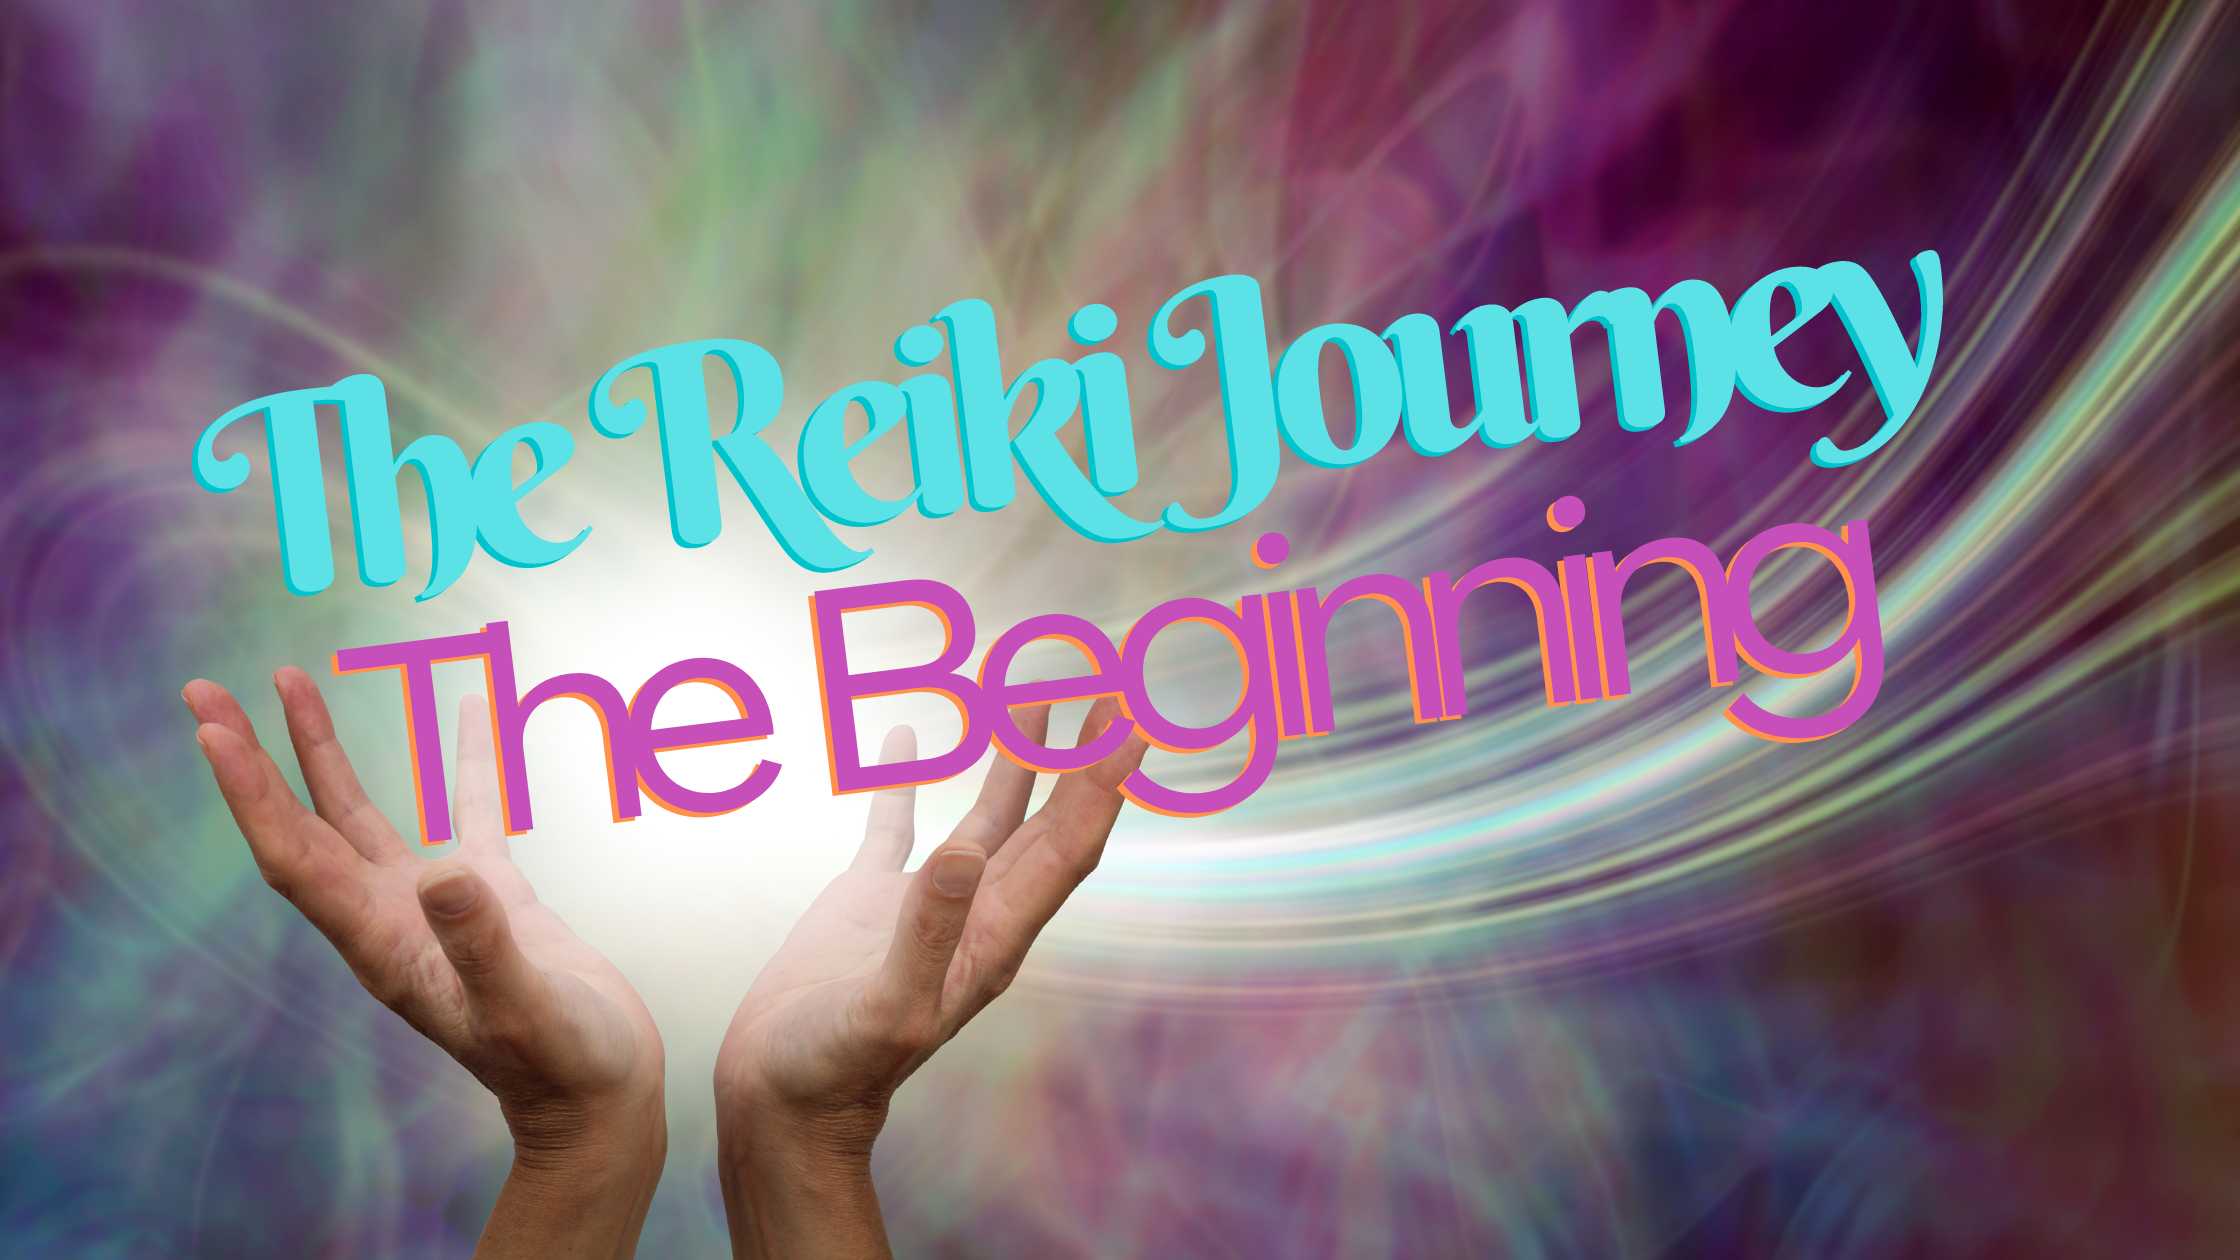 The Reiki Journey: The Beginning